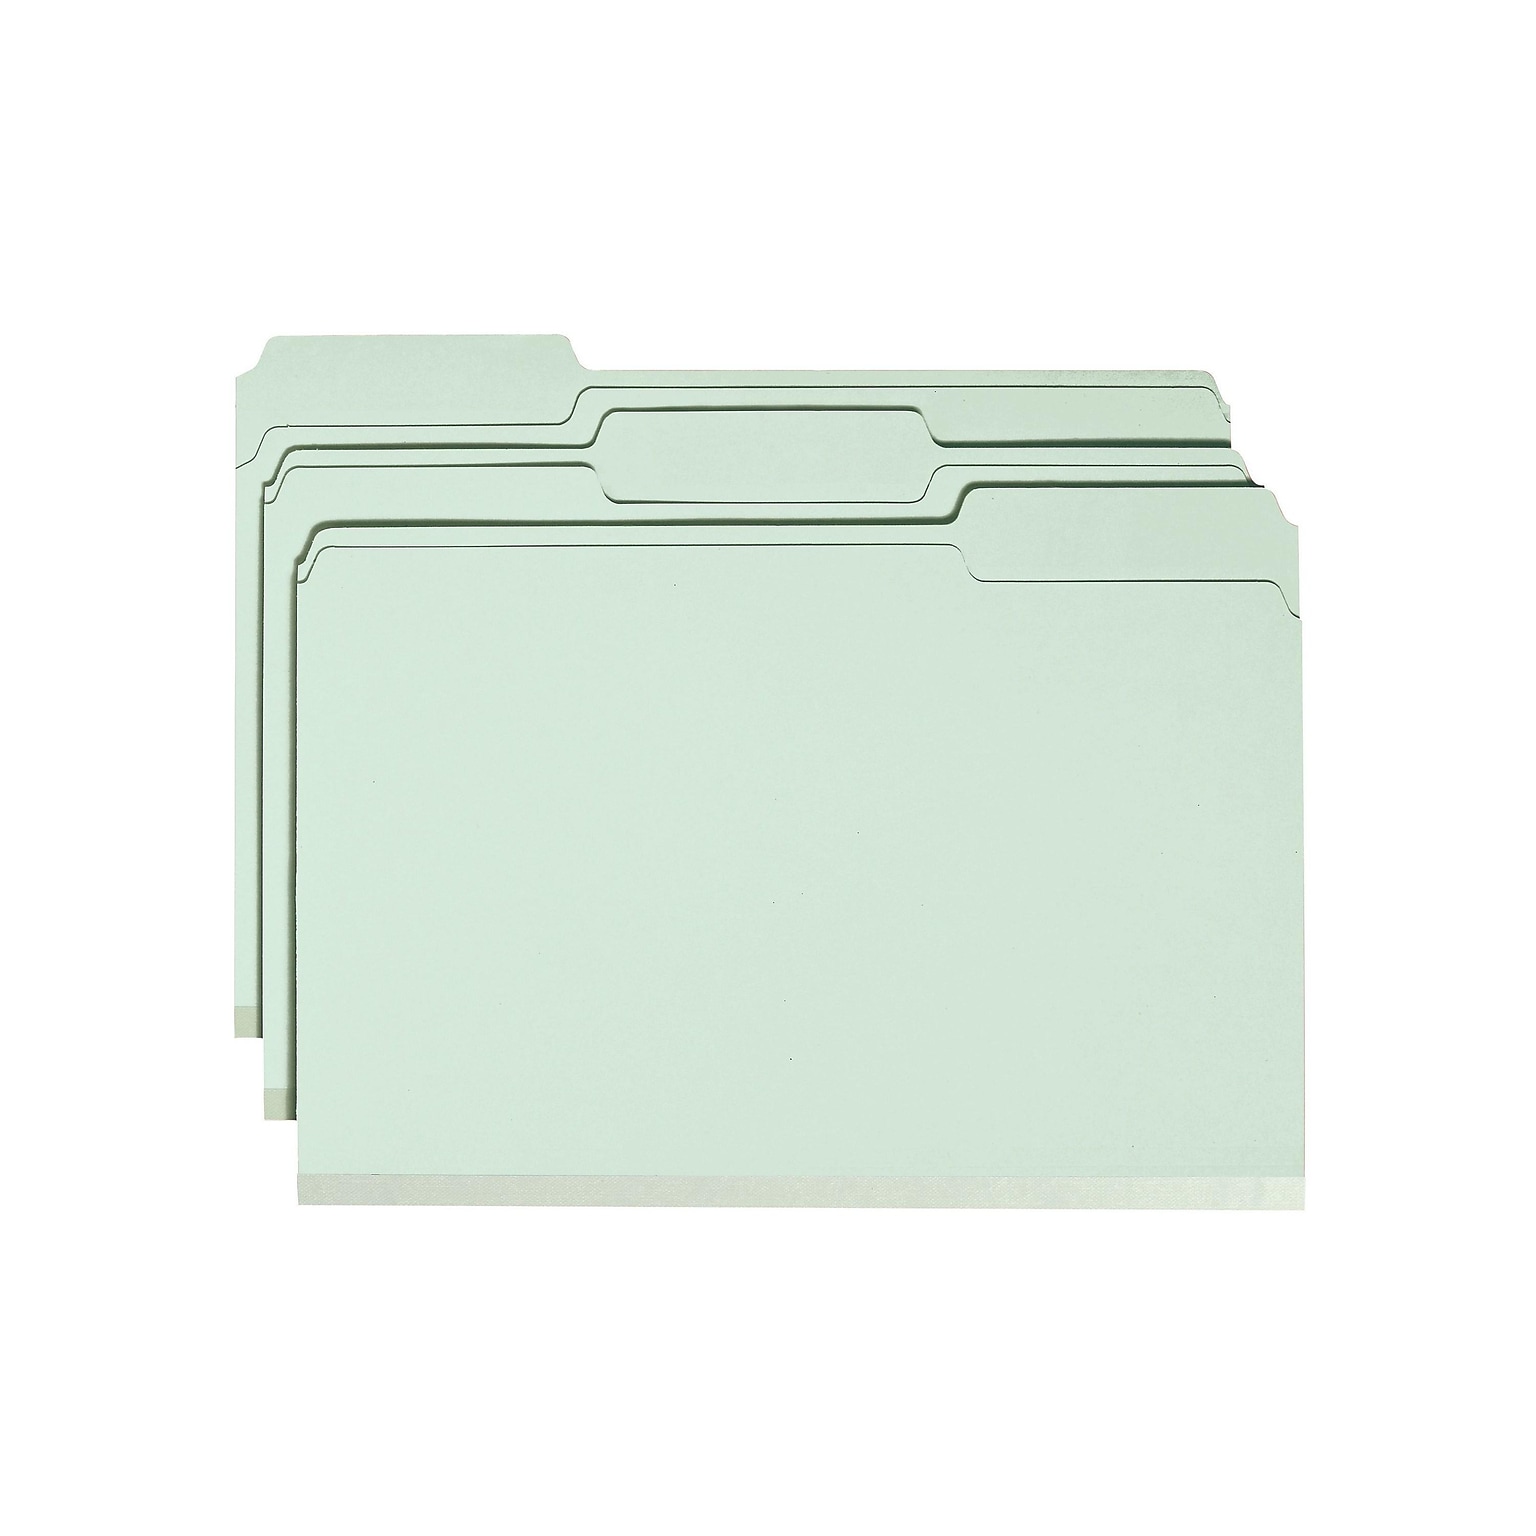 Smead Pressboard Classification Folders with SafeSHIELD Fasteners, 1/3-Cut Tab, Legal Size, Gray/Green, 25/Box (19931)